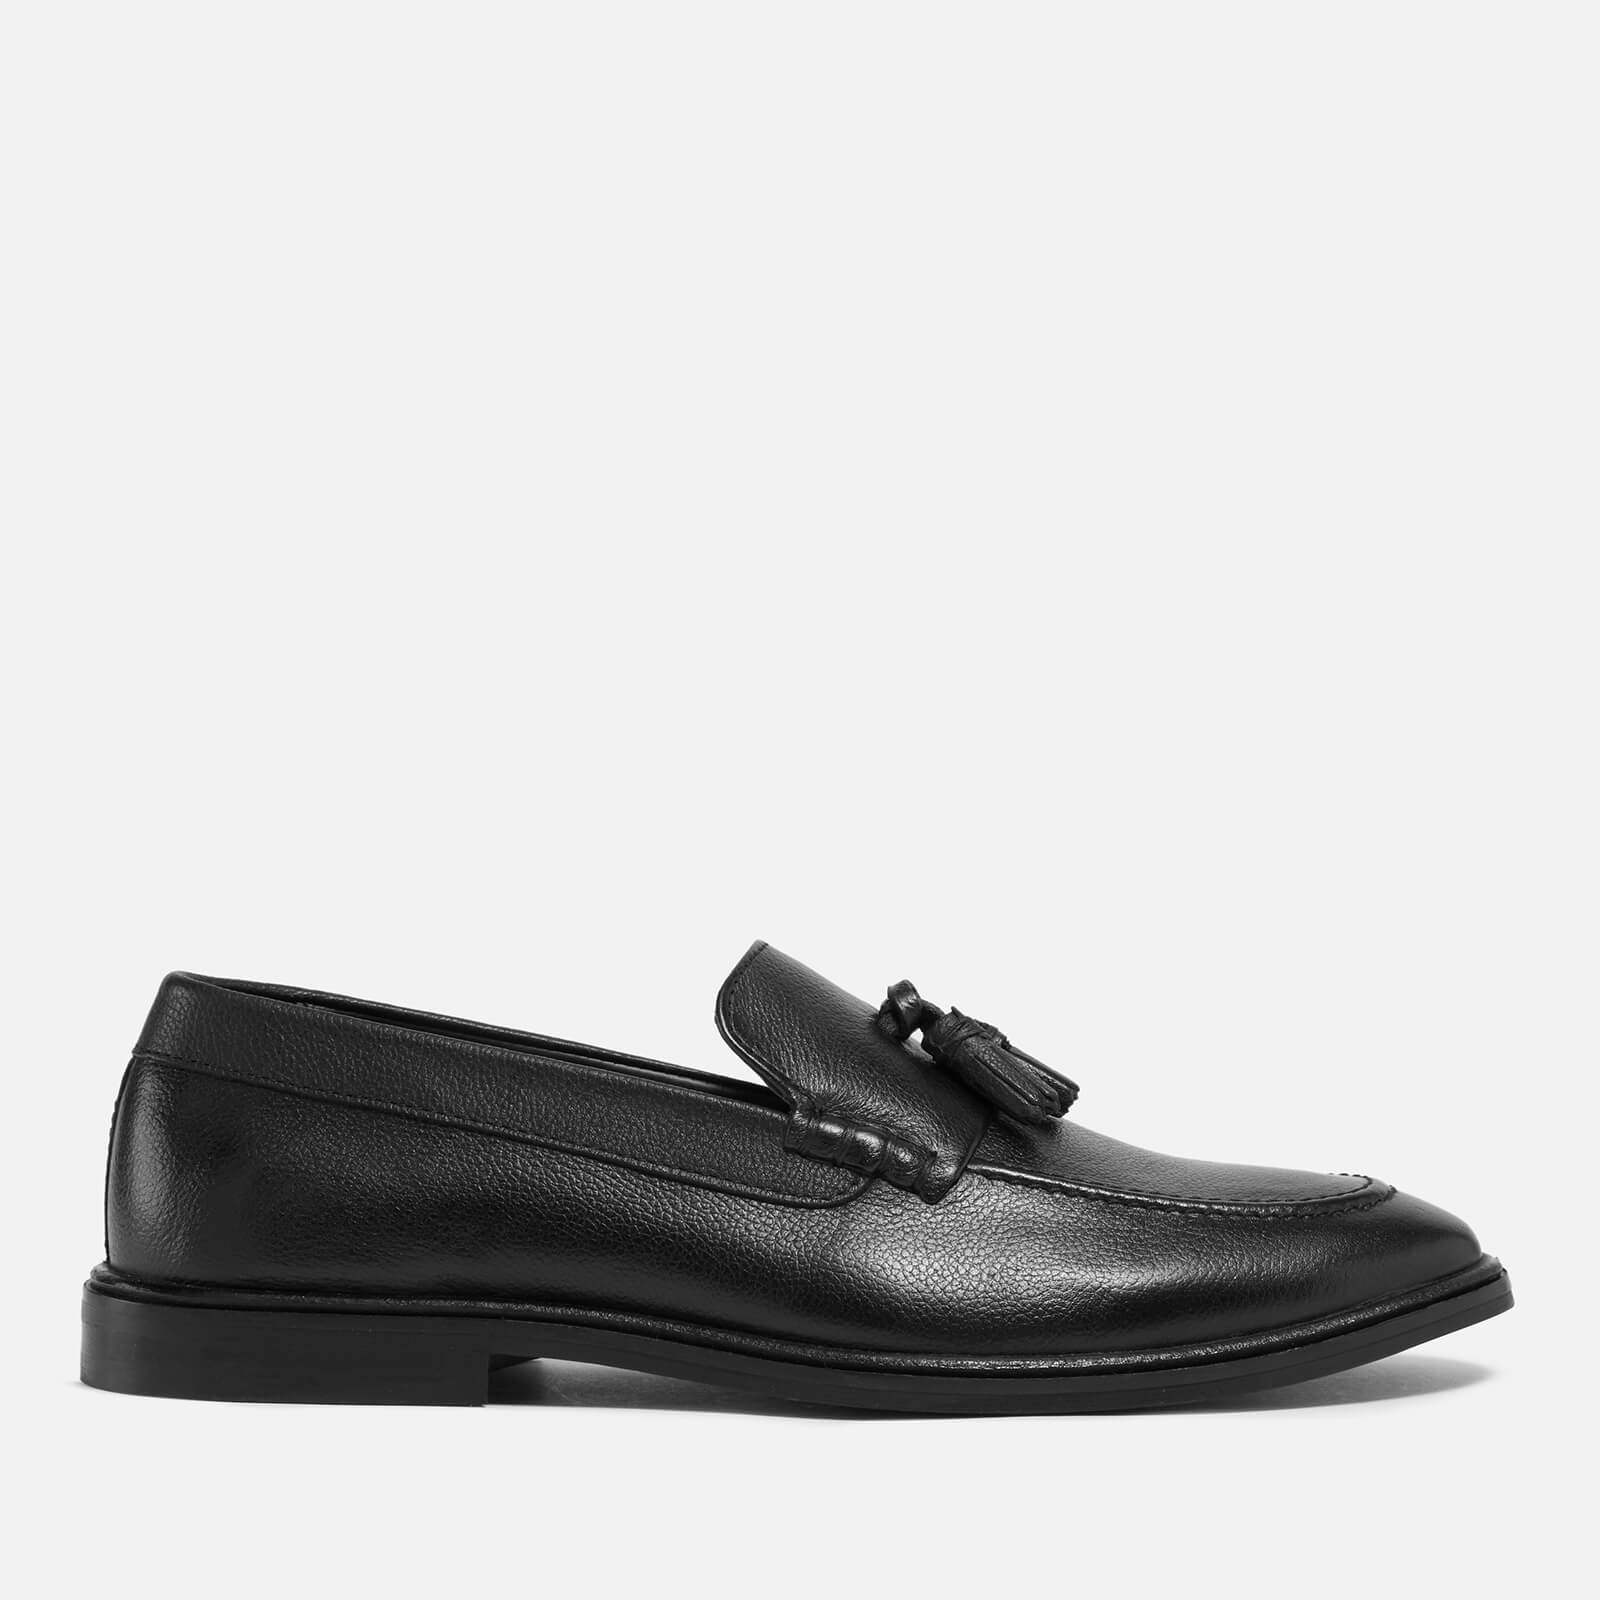 Walk London Men’s West Leather Loafers - Black